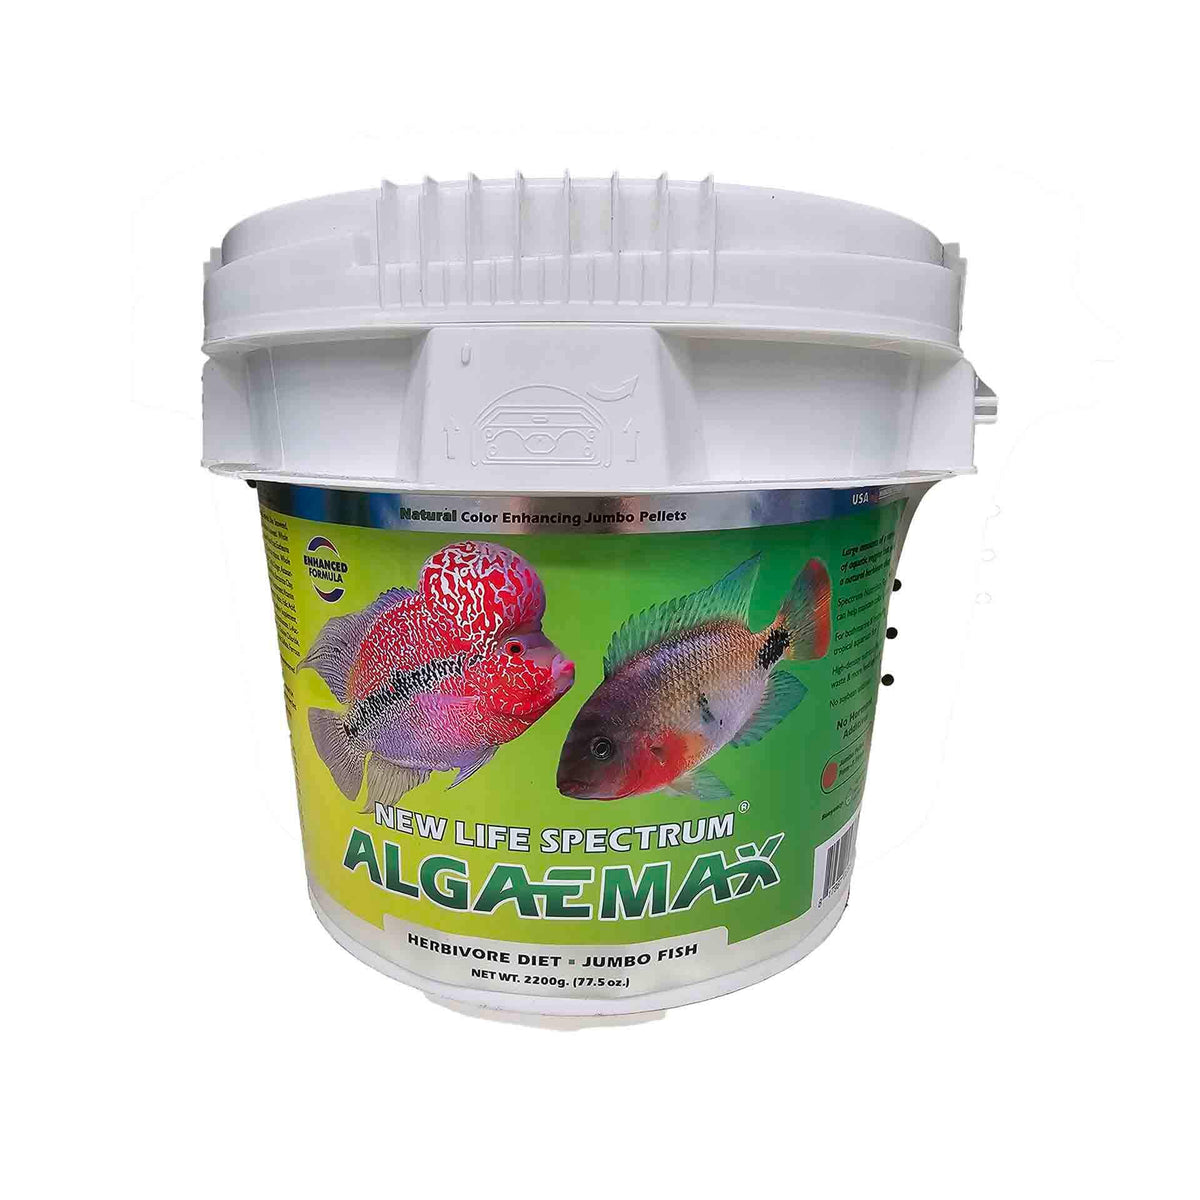 New Life Spectrum AlgaeMax Jumbo 2.2kg - 7.5-8mm Algae max